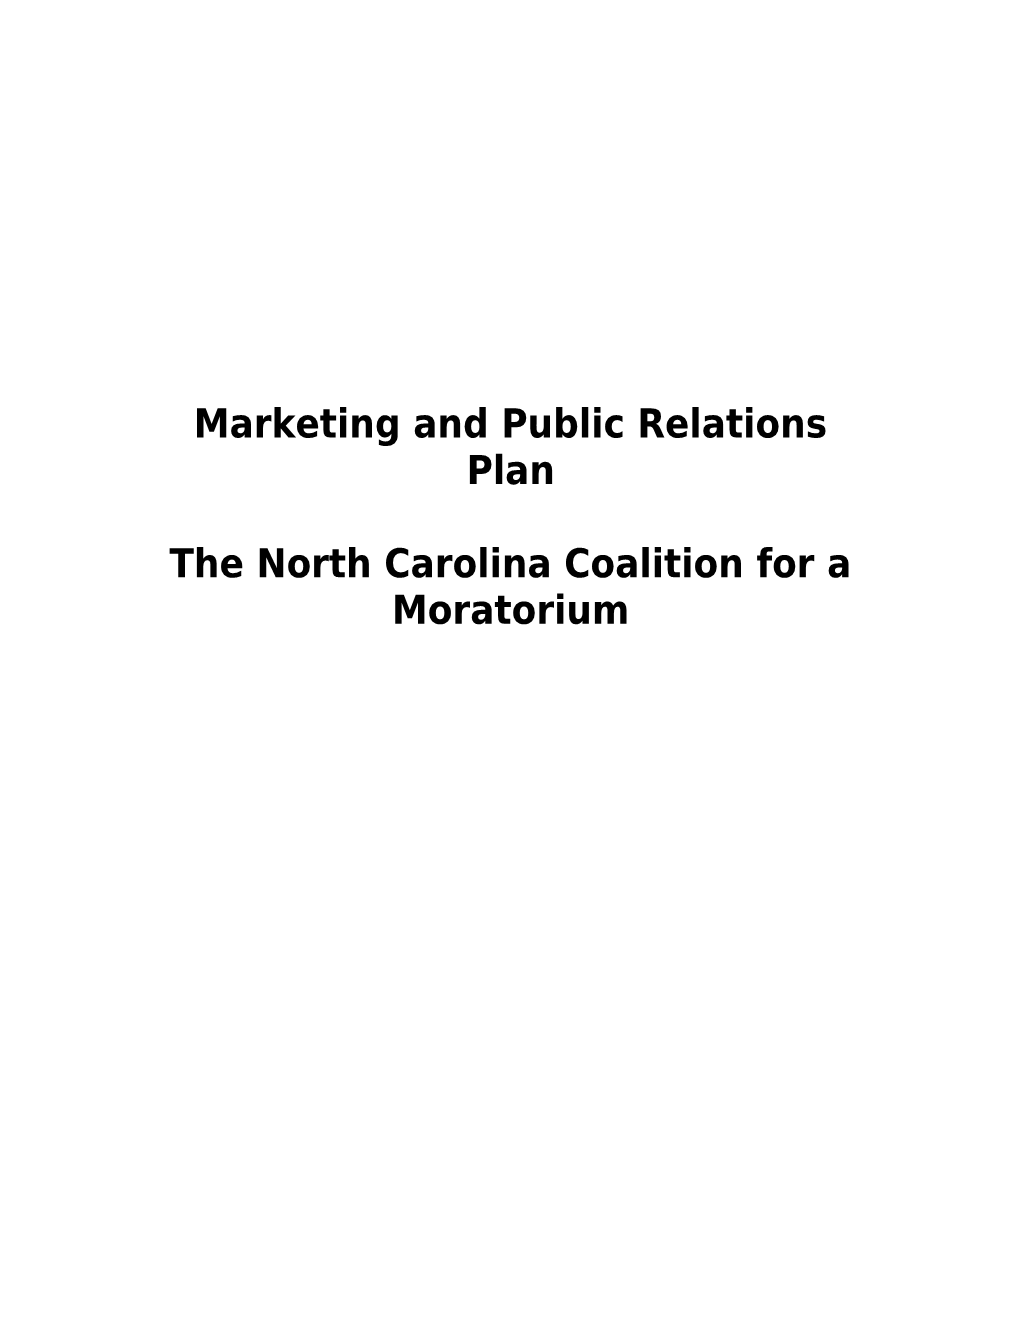 The North Carolina Coalition for a Moratorium